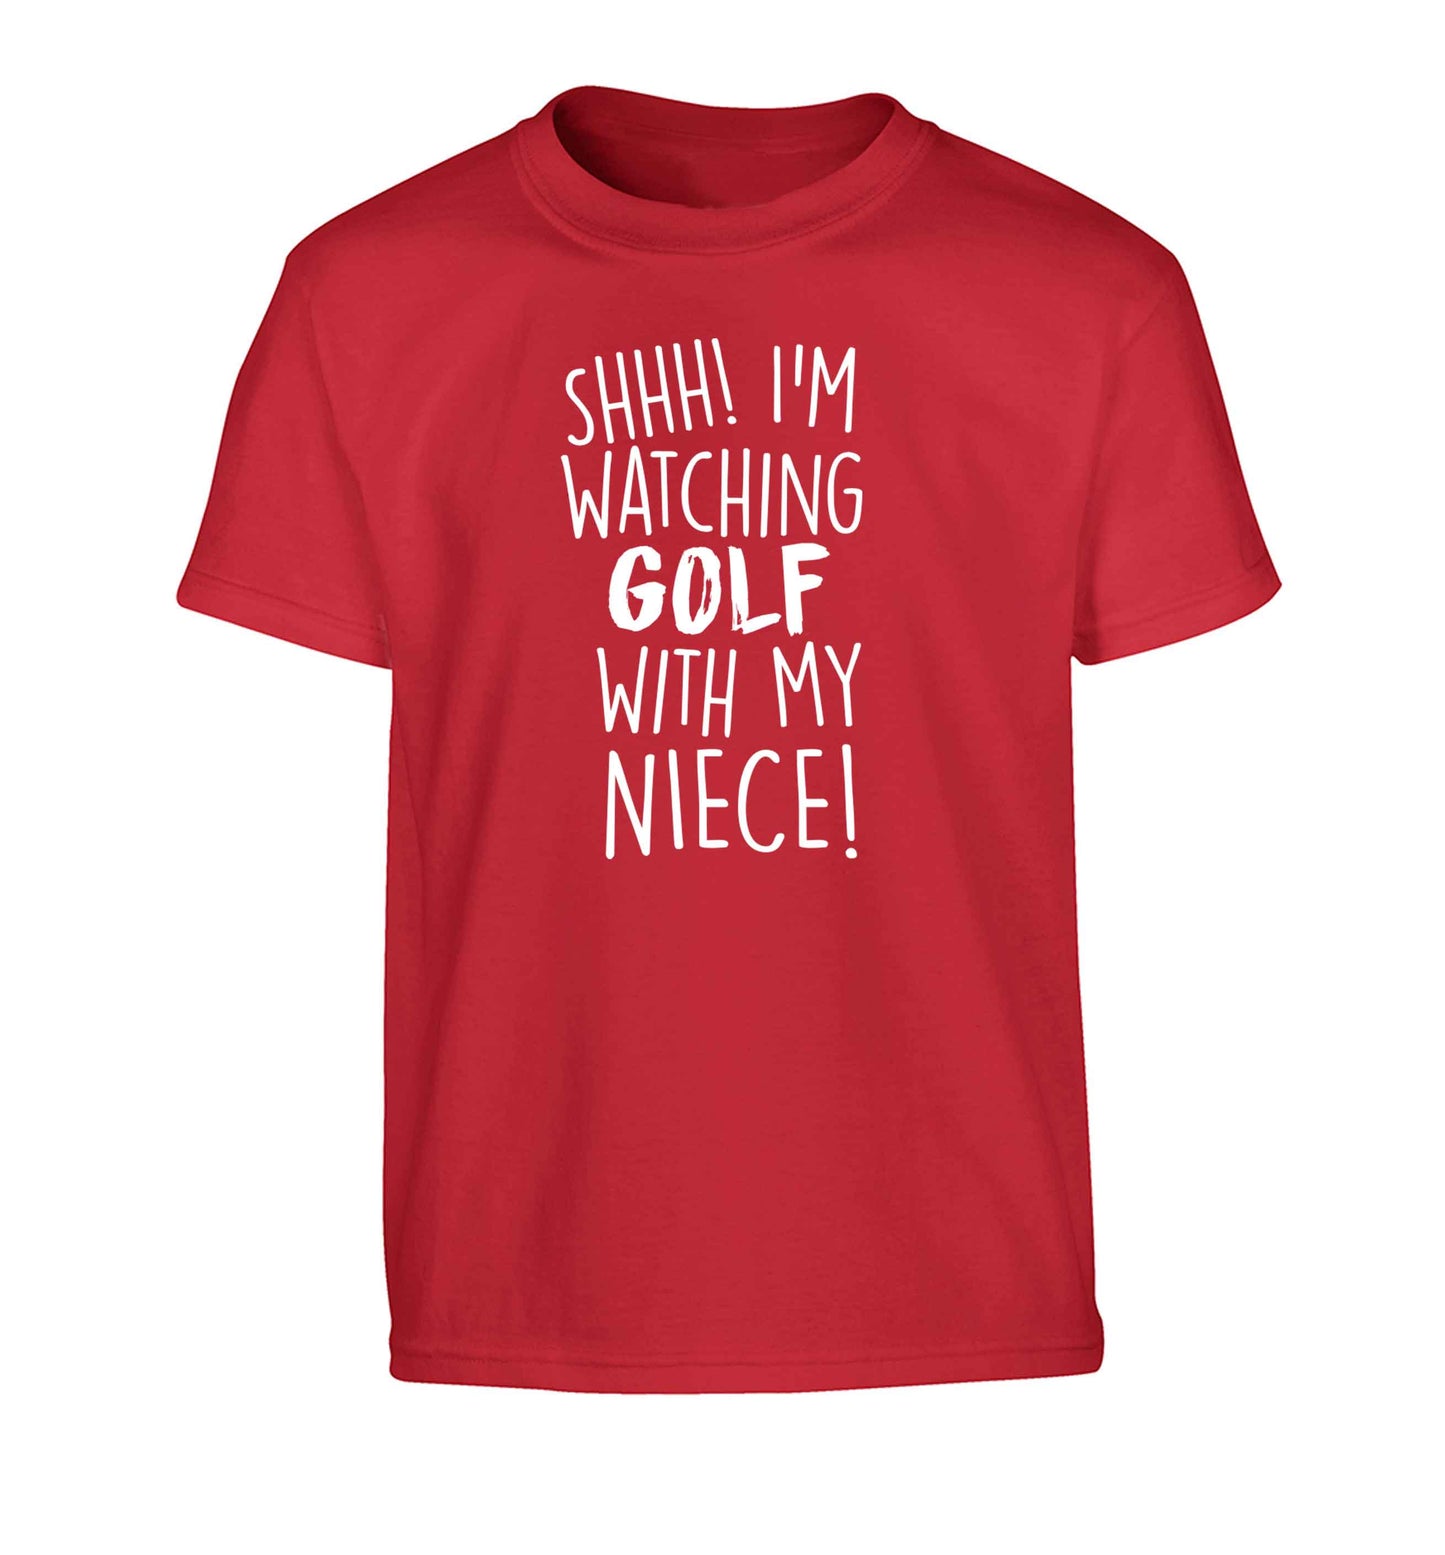 Shh I'm watching golf with my niece Children's red Tshirt 12-13 Years